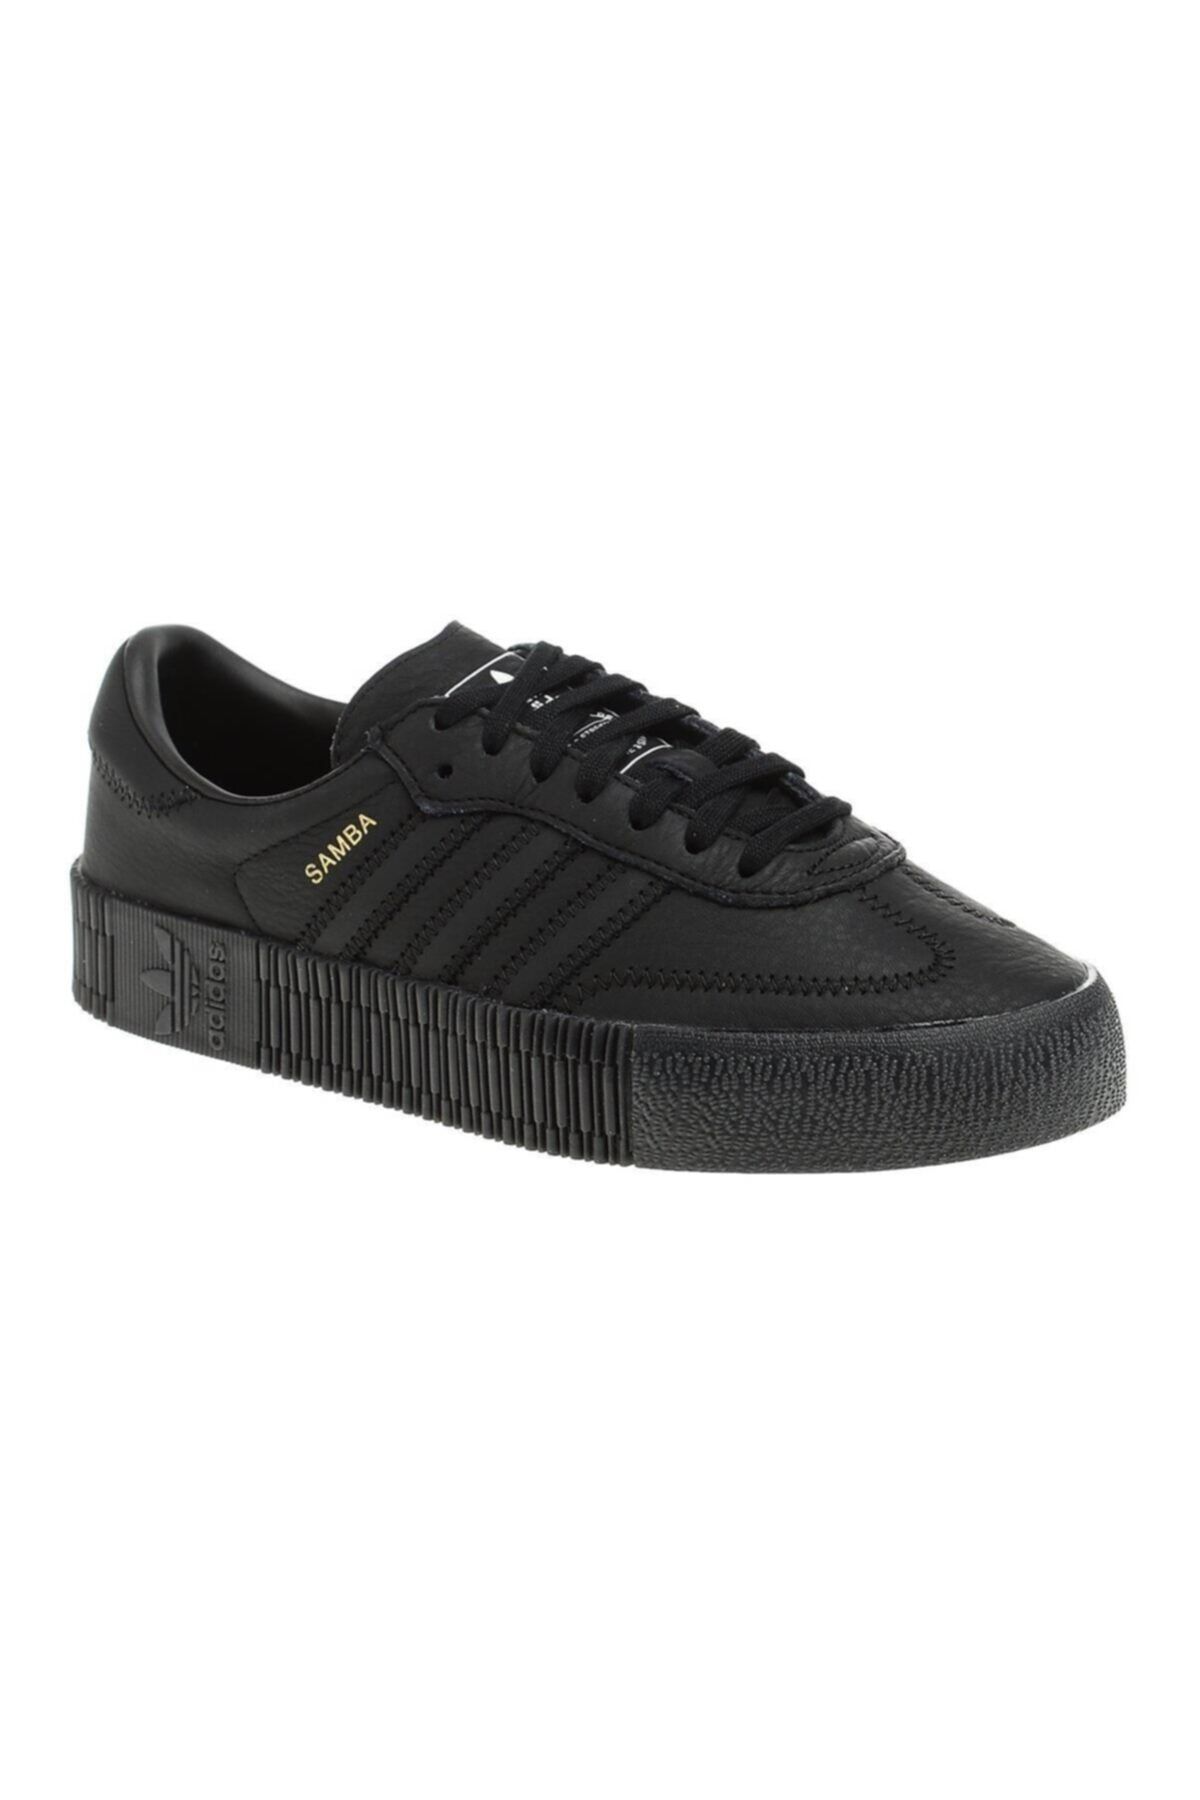 adidas SAMBAROSE W Siyah Kadın Sneaker Ayakkabı 100529973